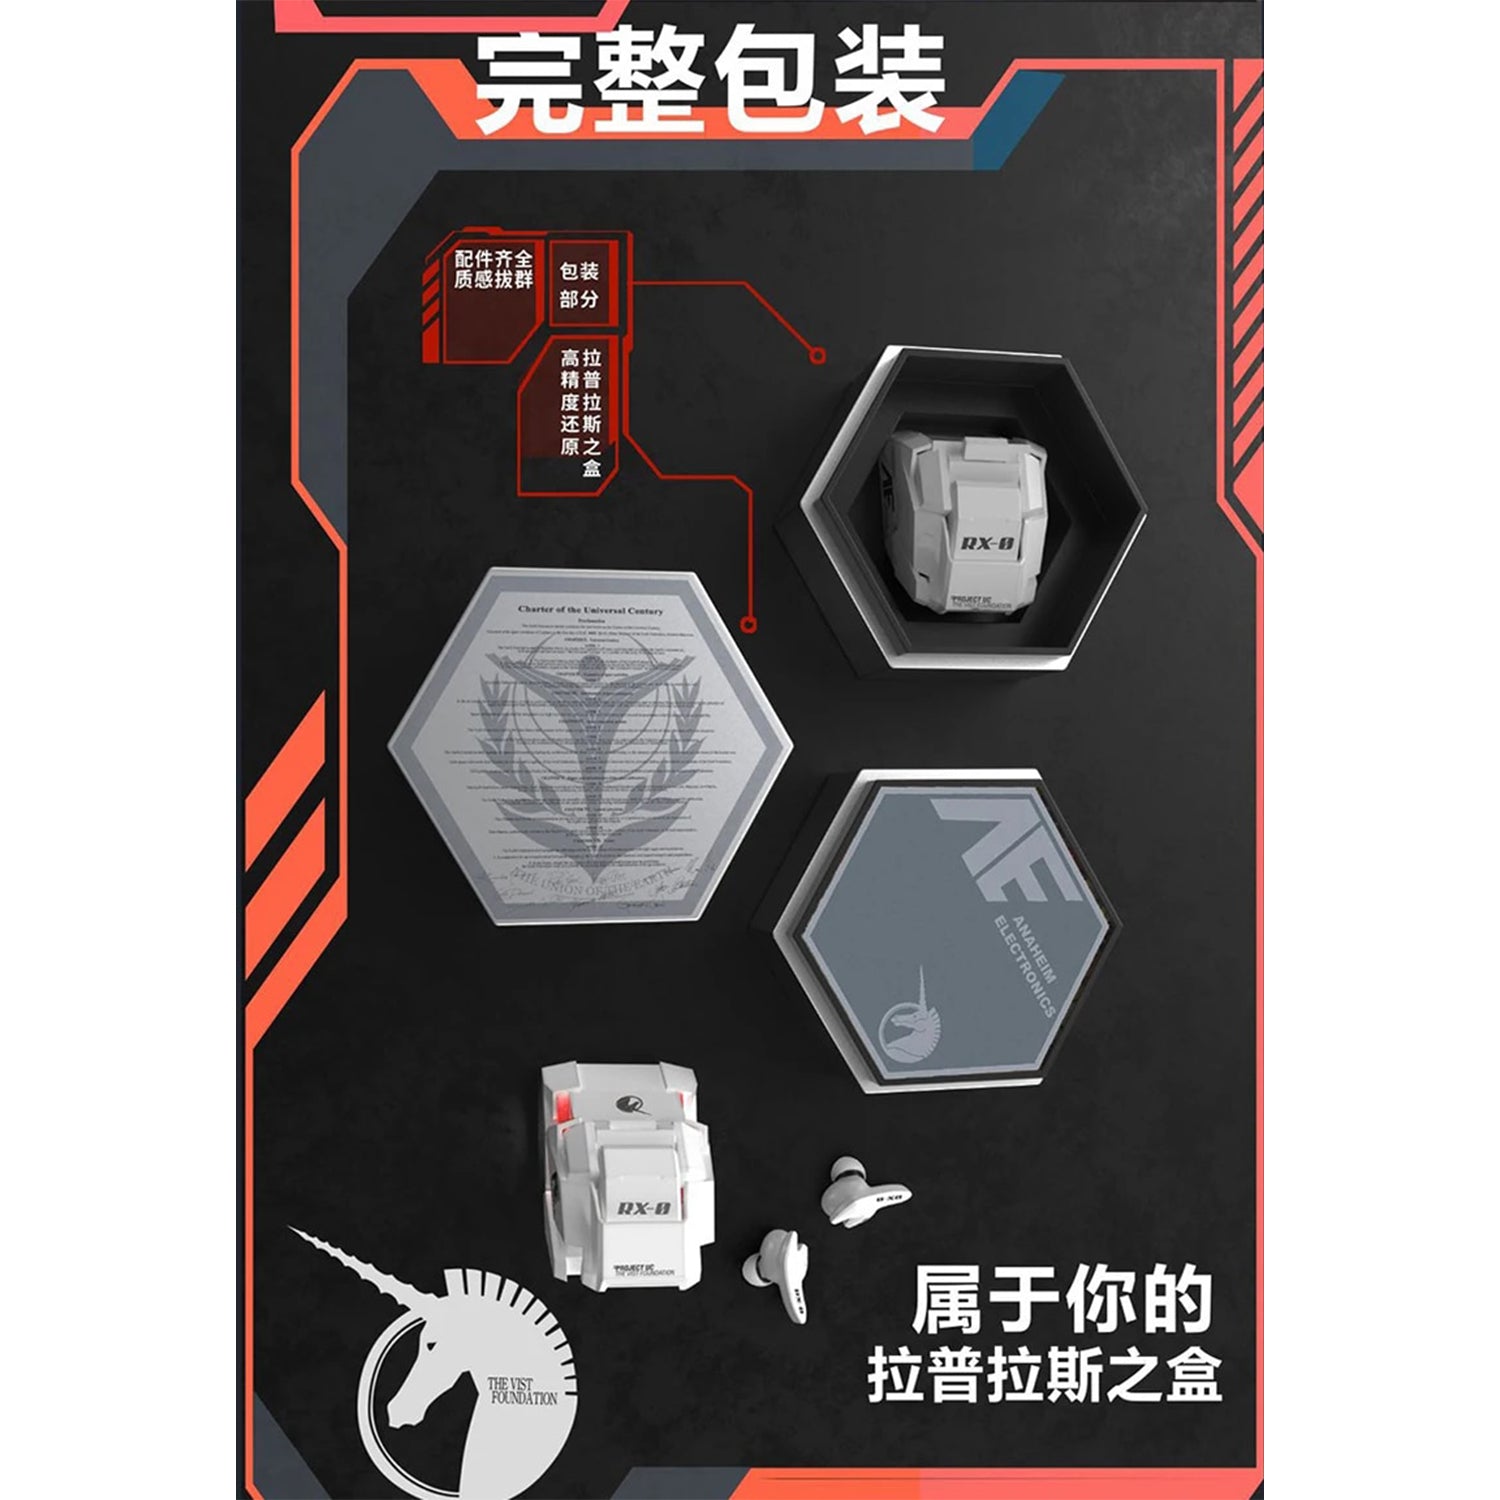 O2W SELECTION DMOOSTER RX-0 Gundam Unicorn Bluetooth Earphones, White